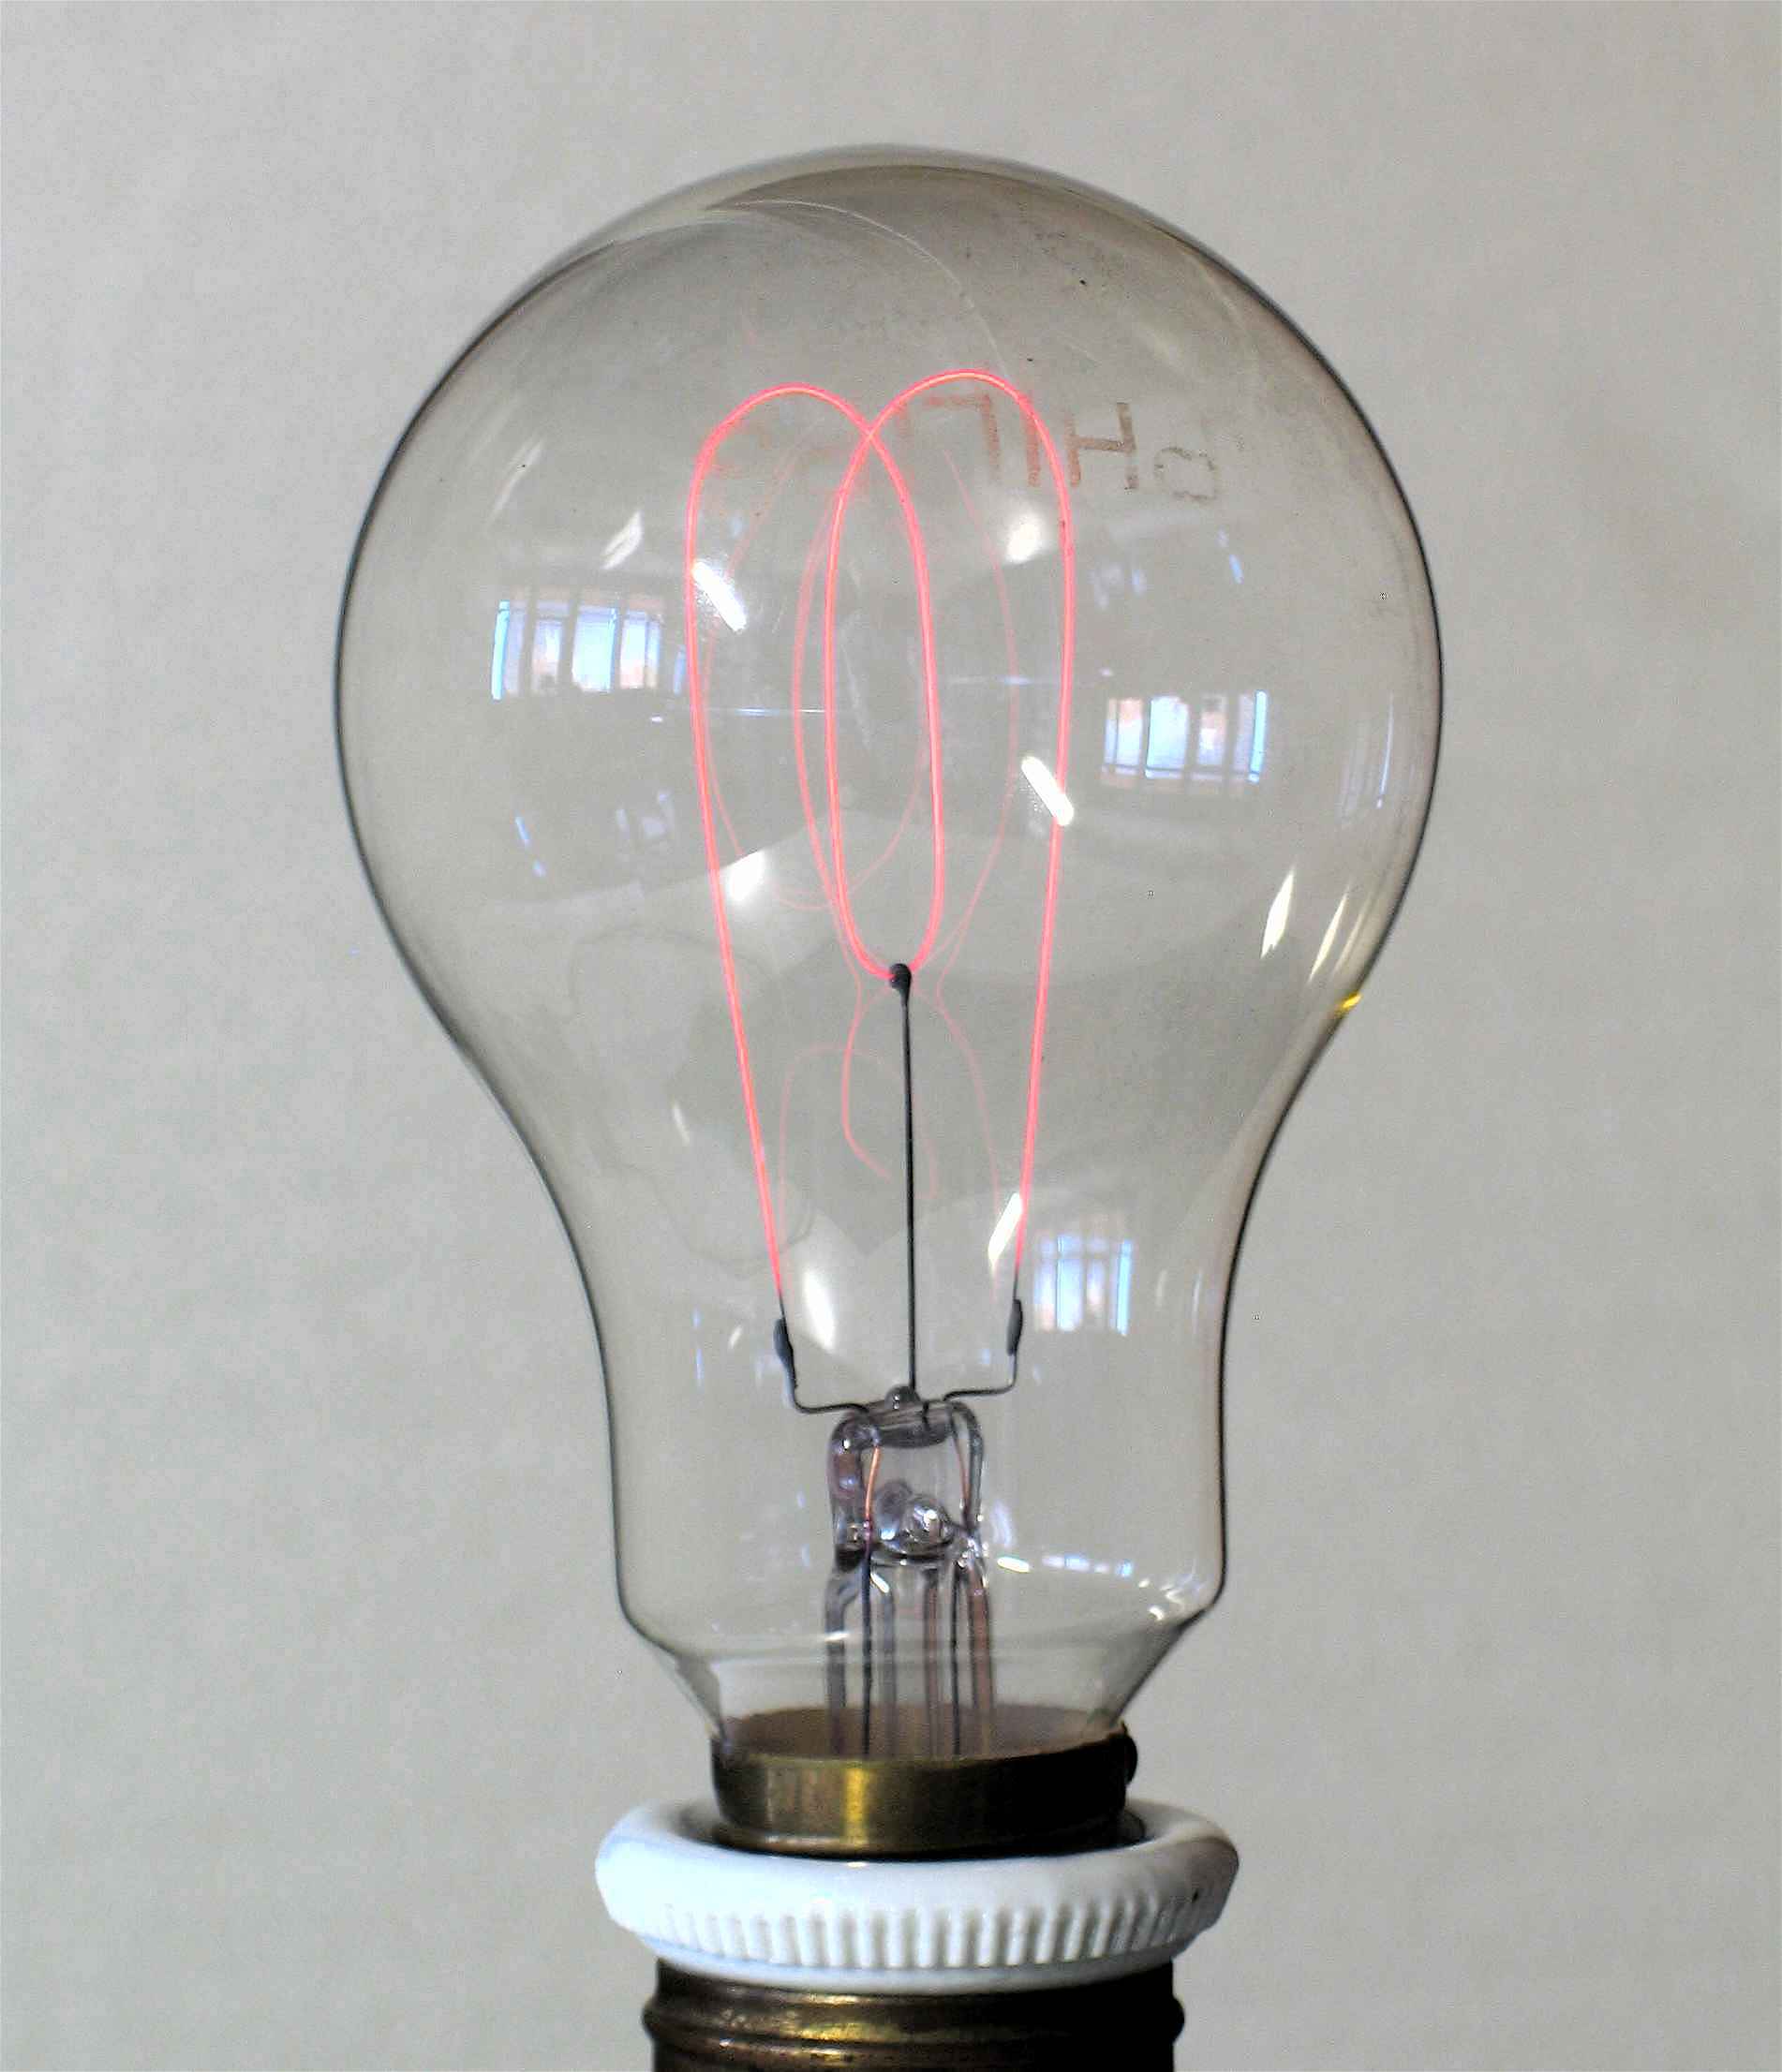 Lot de 2 lampes à incandescence “ballon”
(filament de carbone)